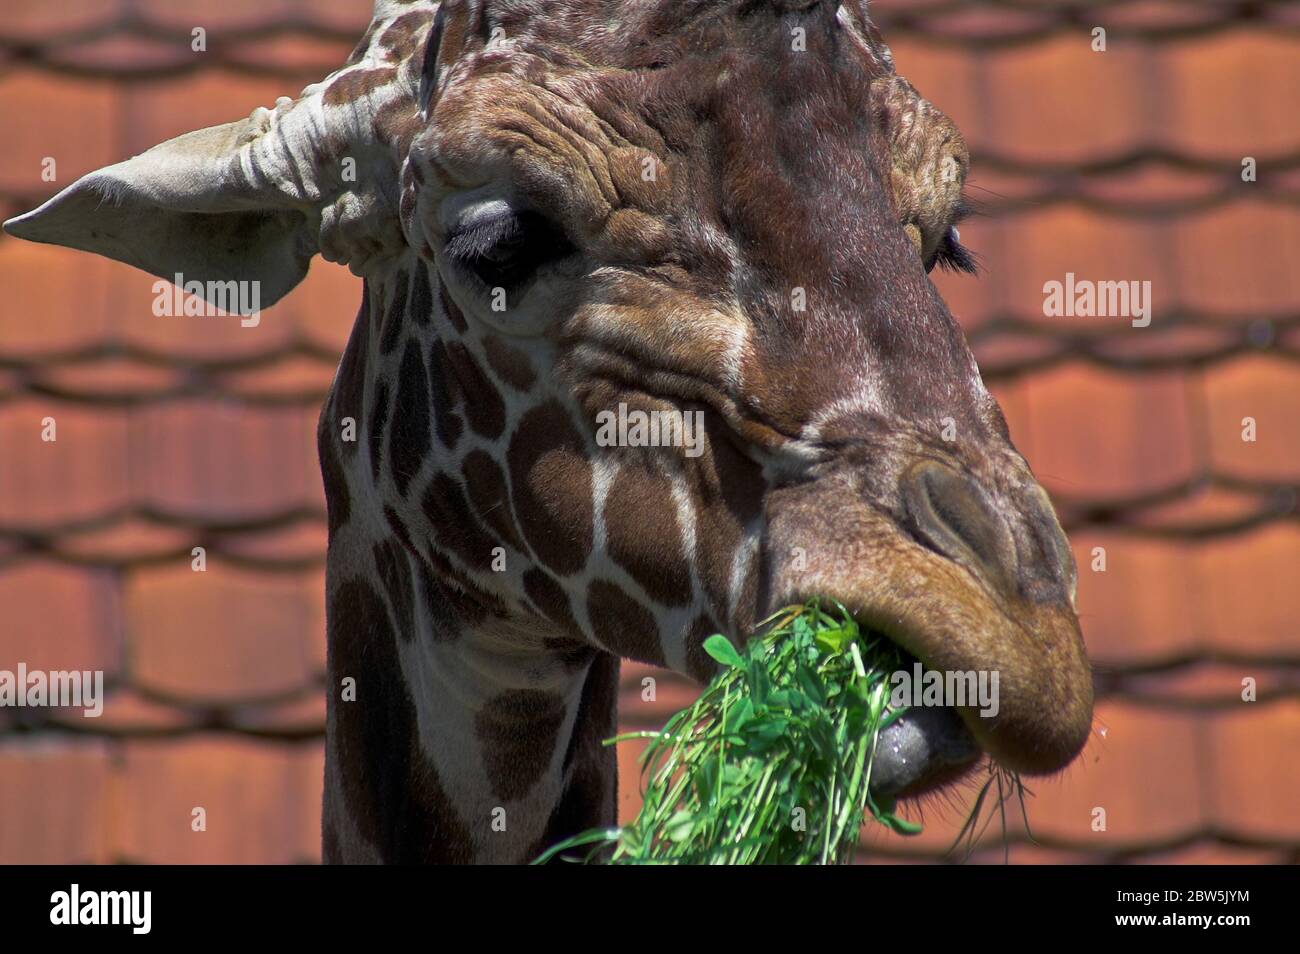 Giraffe head close up. Giraffenkopf hautnah. Głowa żyrafy z bliska. 長頸鹿頭關閉。A giraffe chews grass. Eine Giraffe kaut Gras. Una jirafa mastica hierba. Stock Photo